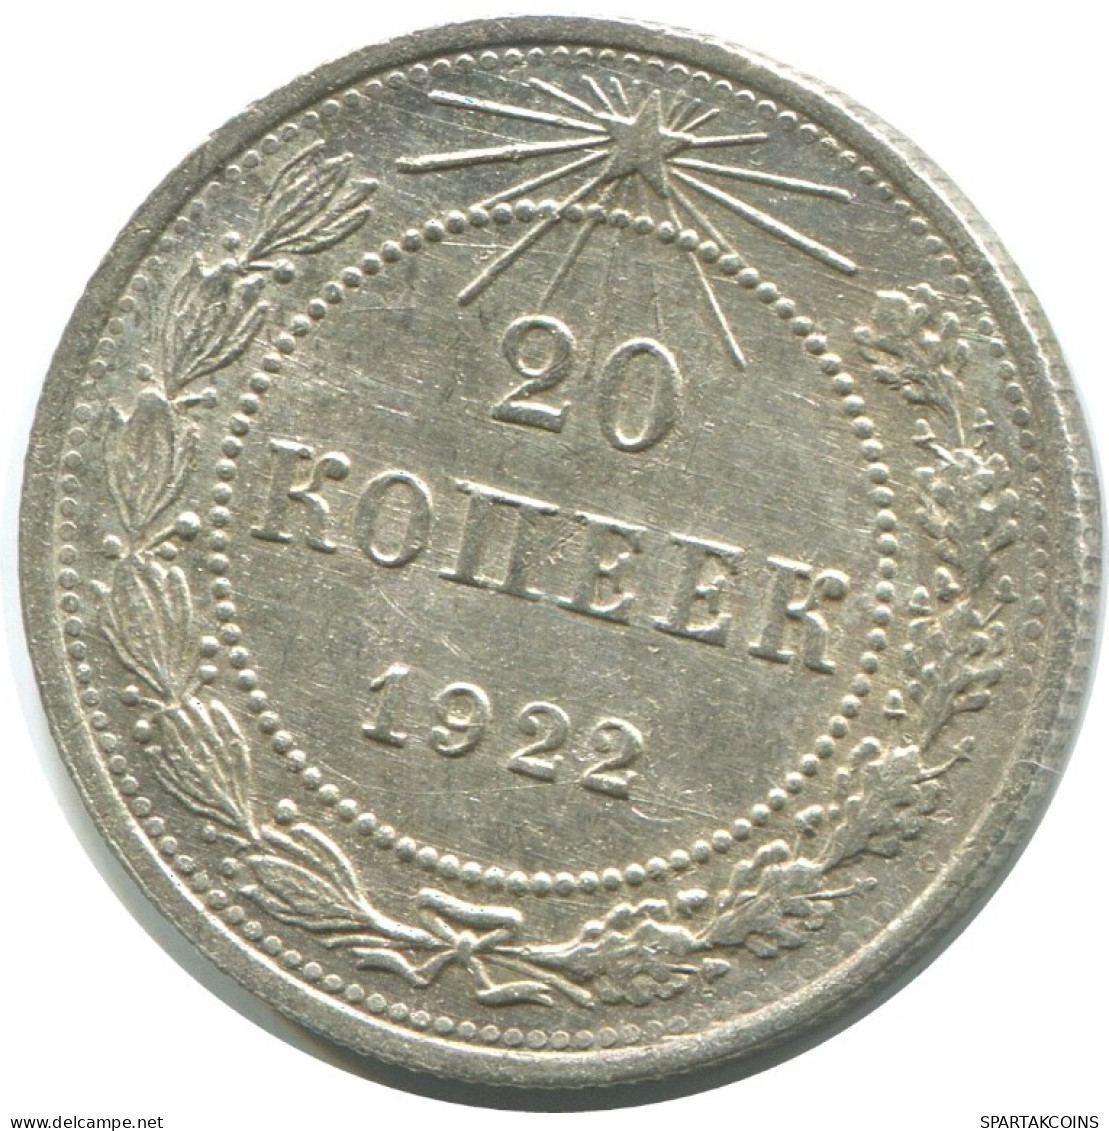 20 KOPEKS 1923 RUSSIA RSFSR SILVER Coin HIGH GRADE #AF407.4.U.A - Russia